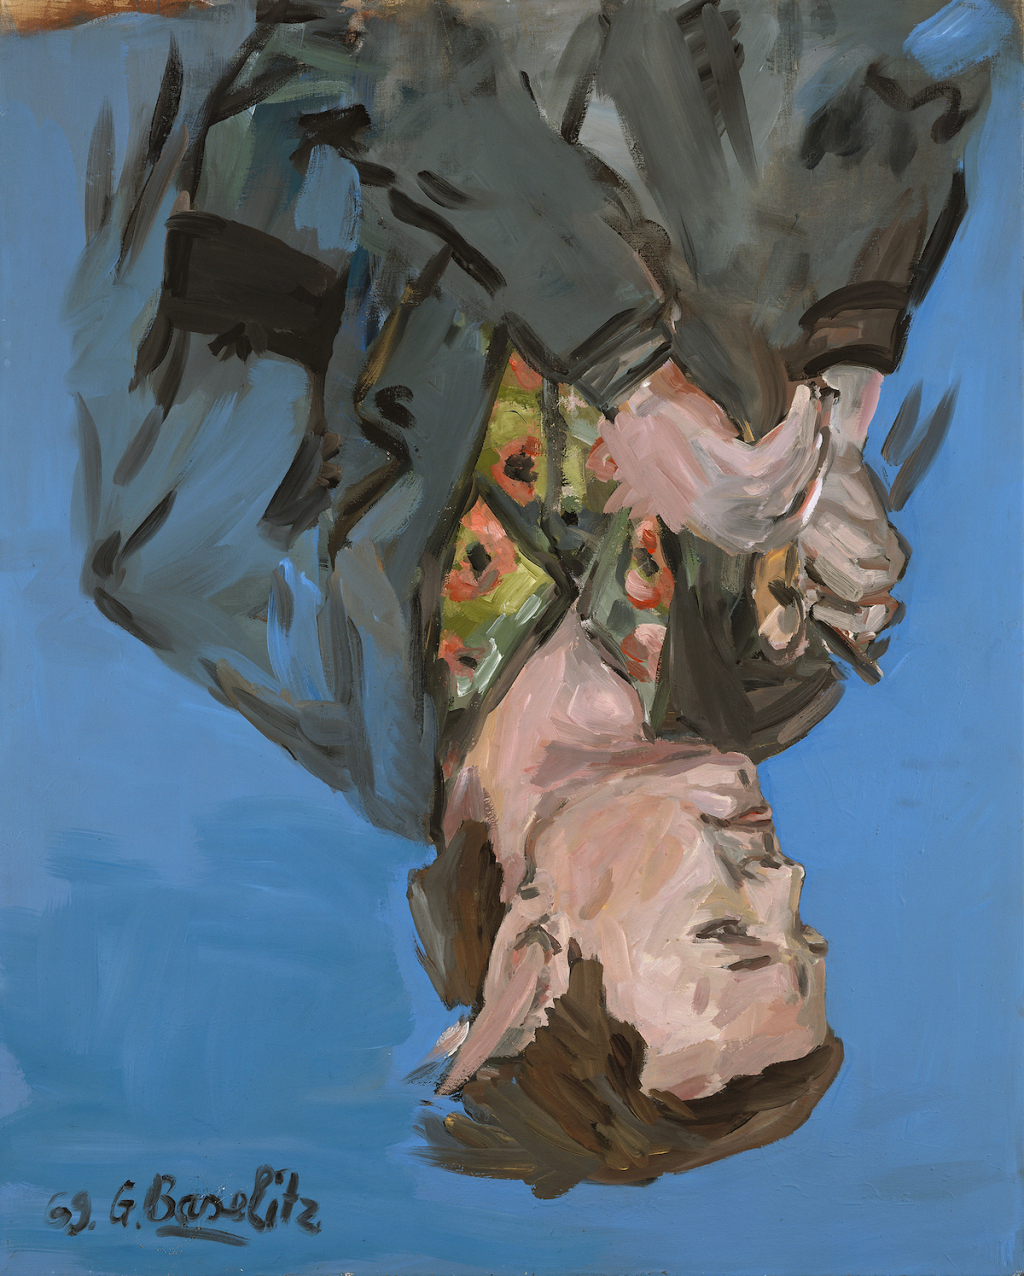 Georg Baselitz Gifts Six Upside-Down Portraits to Metropolitan Museum of Art